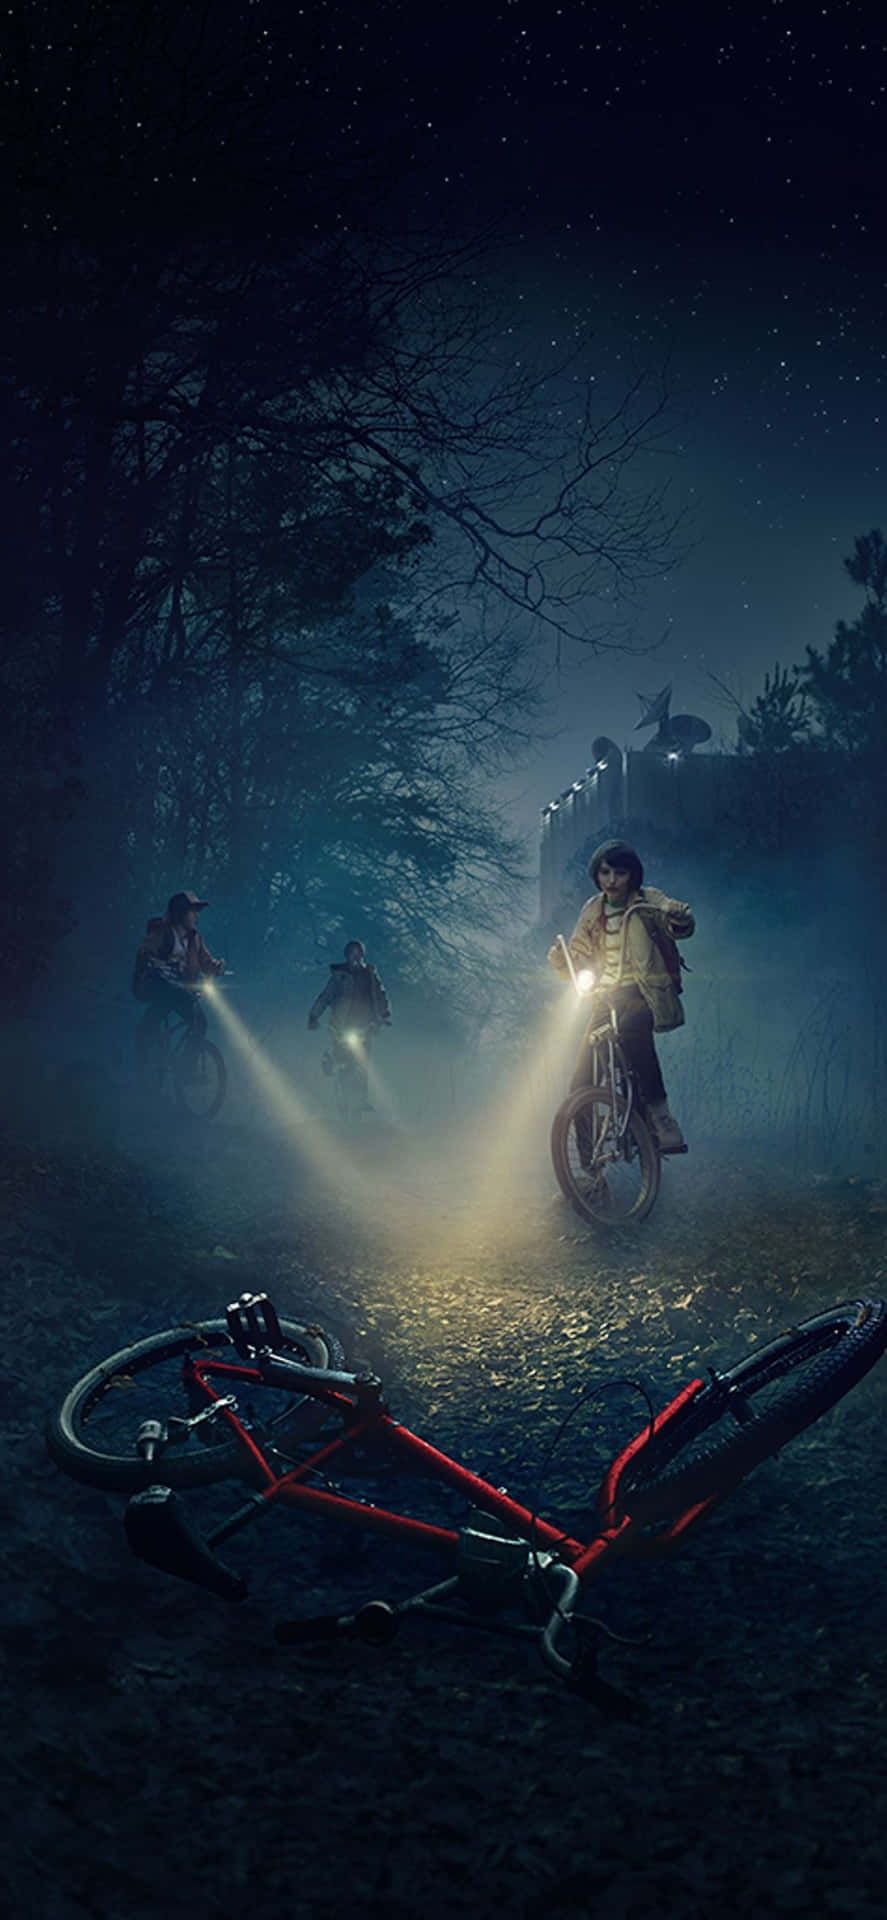 Stranger Things Kids On Bikes Night Adventure Wallpaper